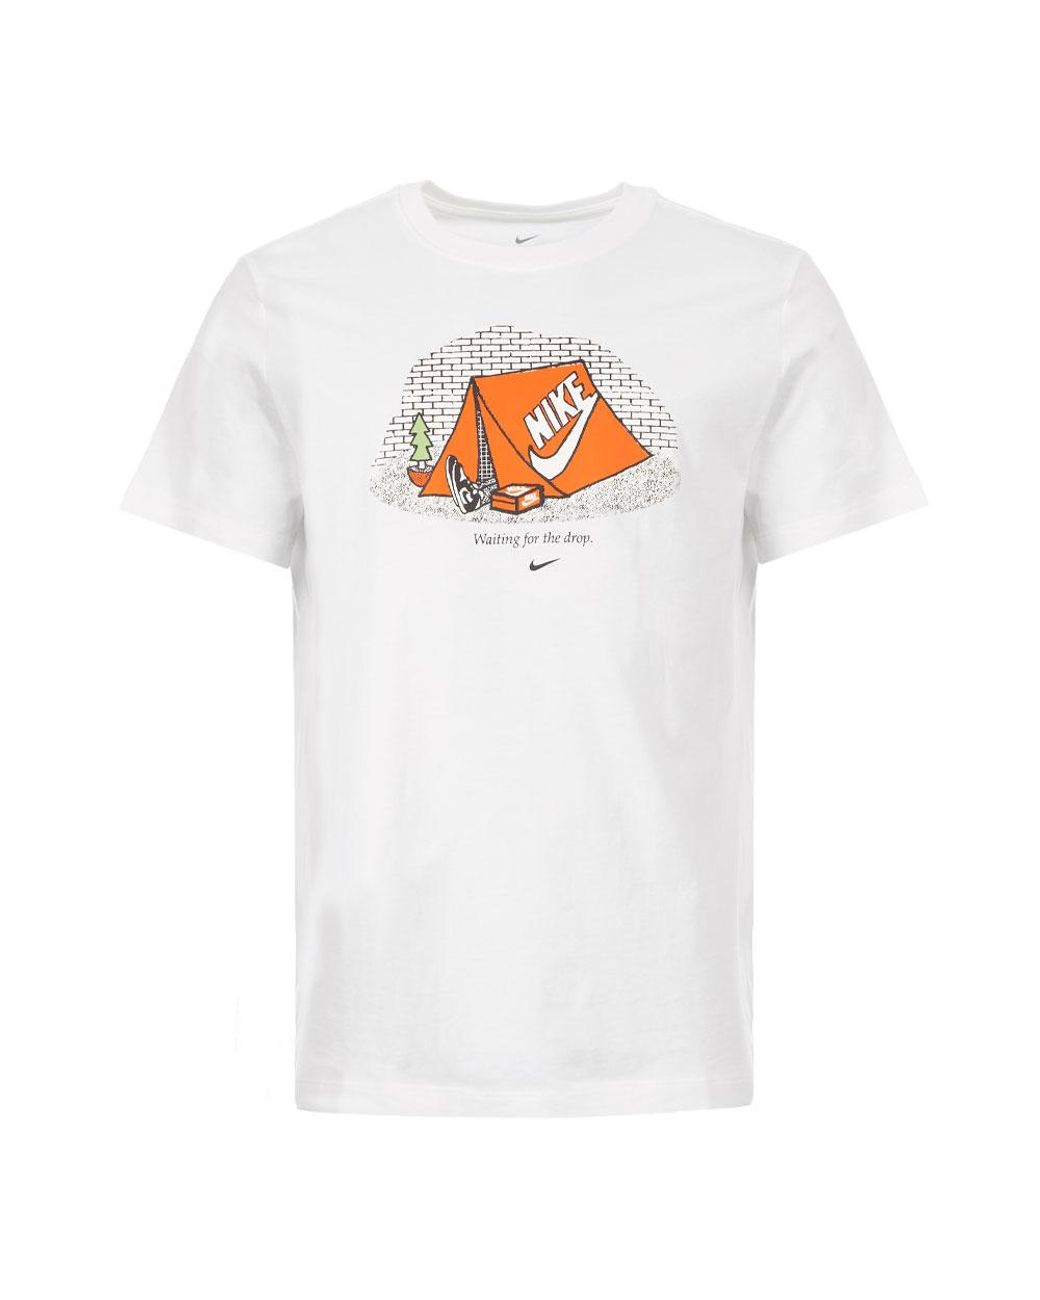 Nike Shirt Adult Medium White Orange Swoosh Spell Out Logo Just Do